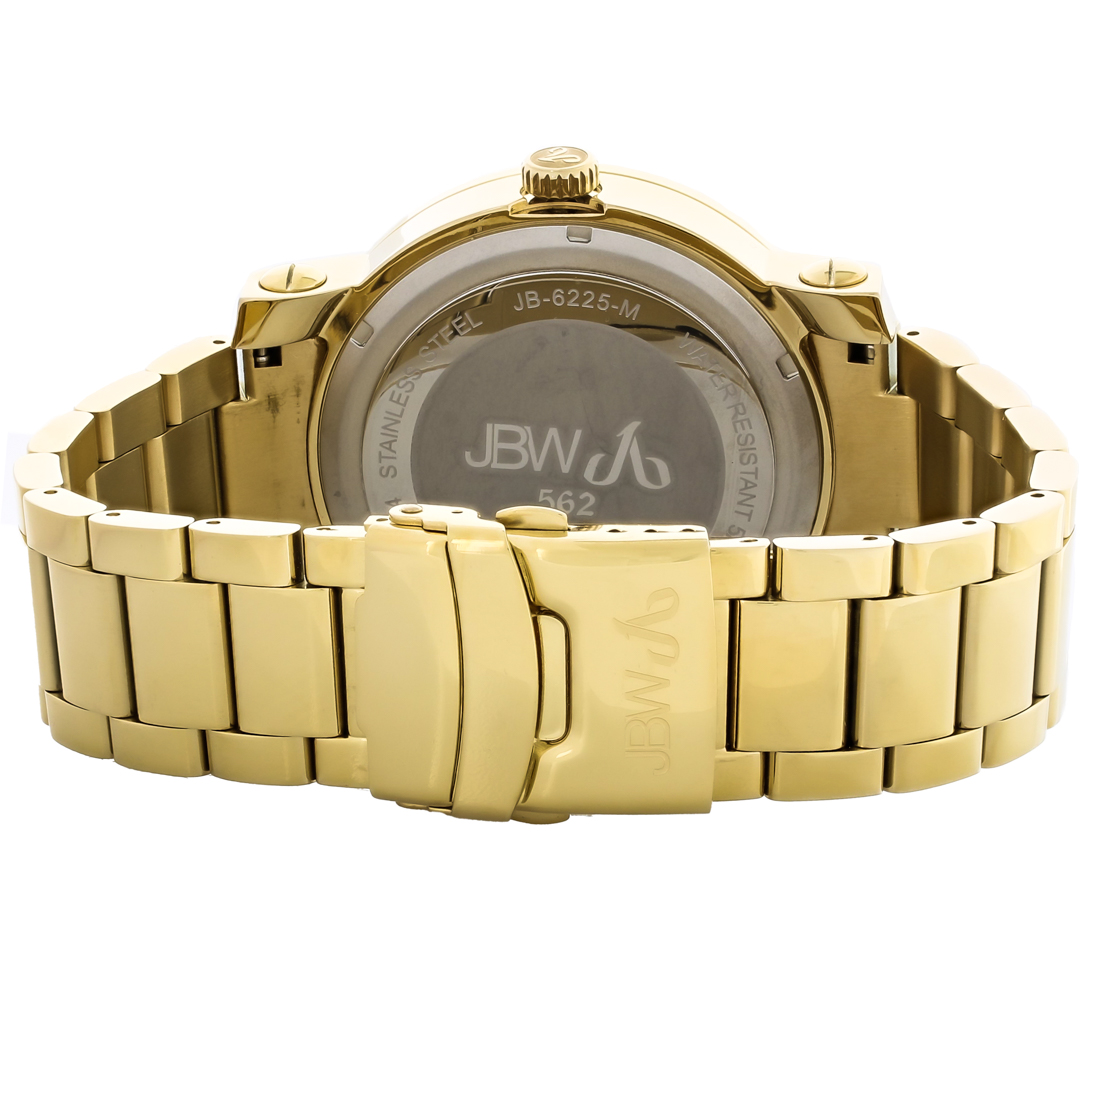 JBW 562 Mens 18k Gold PVD Stainless Steel Diamond Quartz Watch JB-6225-M